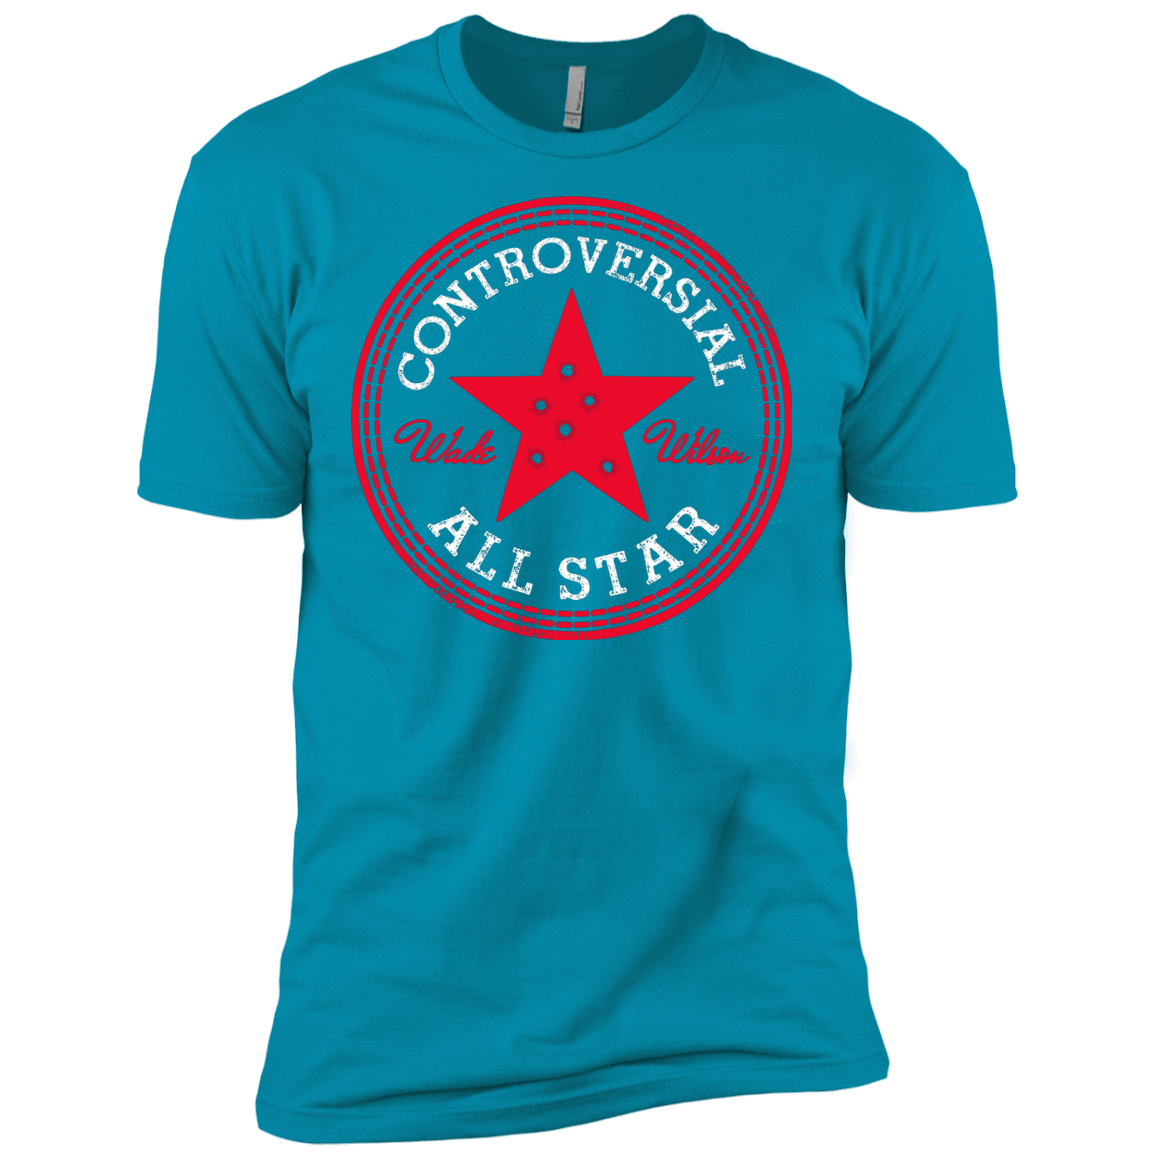 T-Shirts Turquoise / X-Small All Star Men's Premium T-Shirt